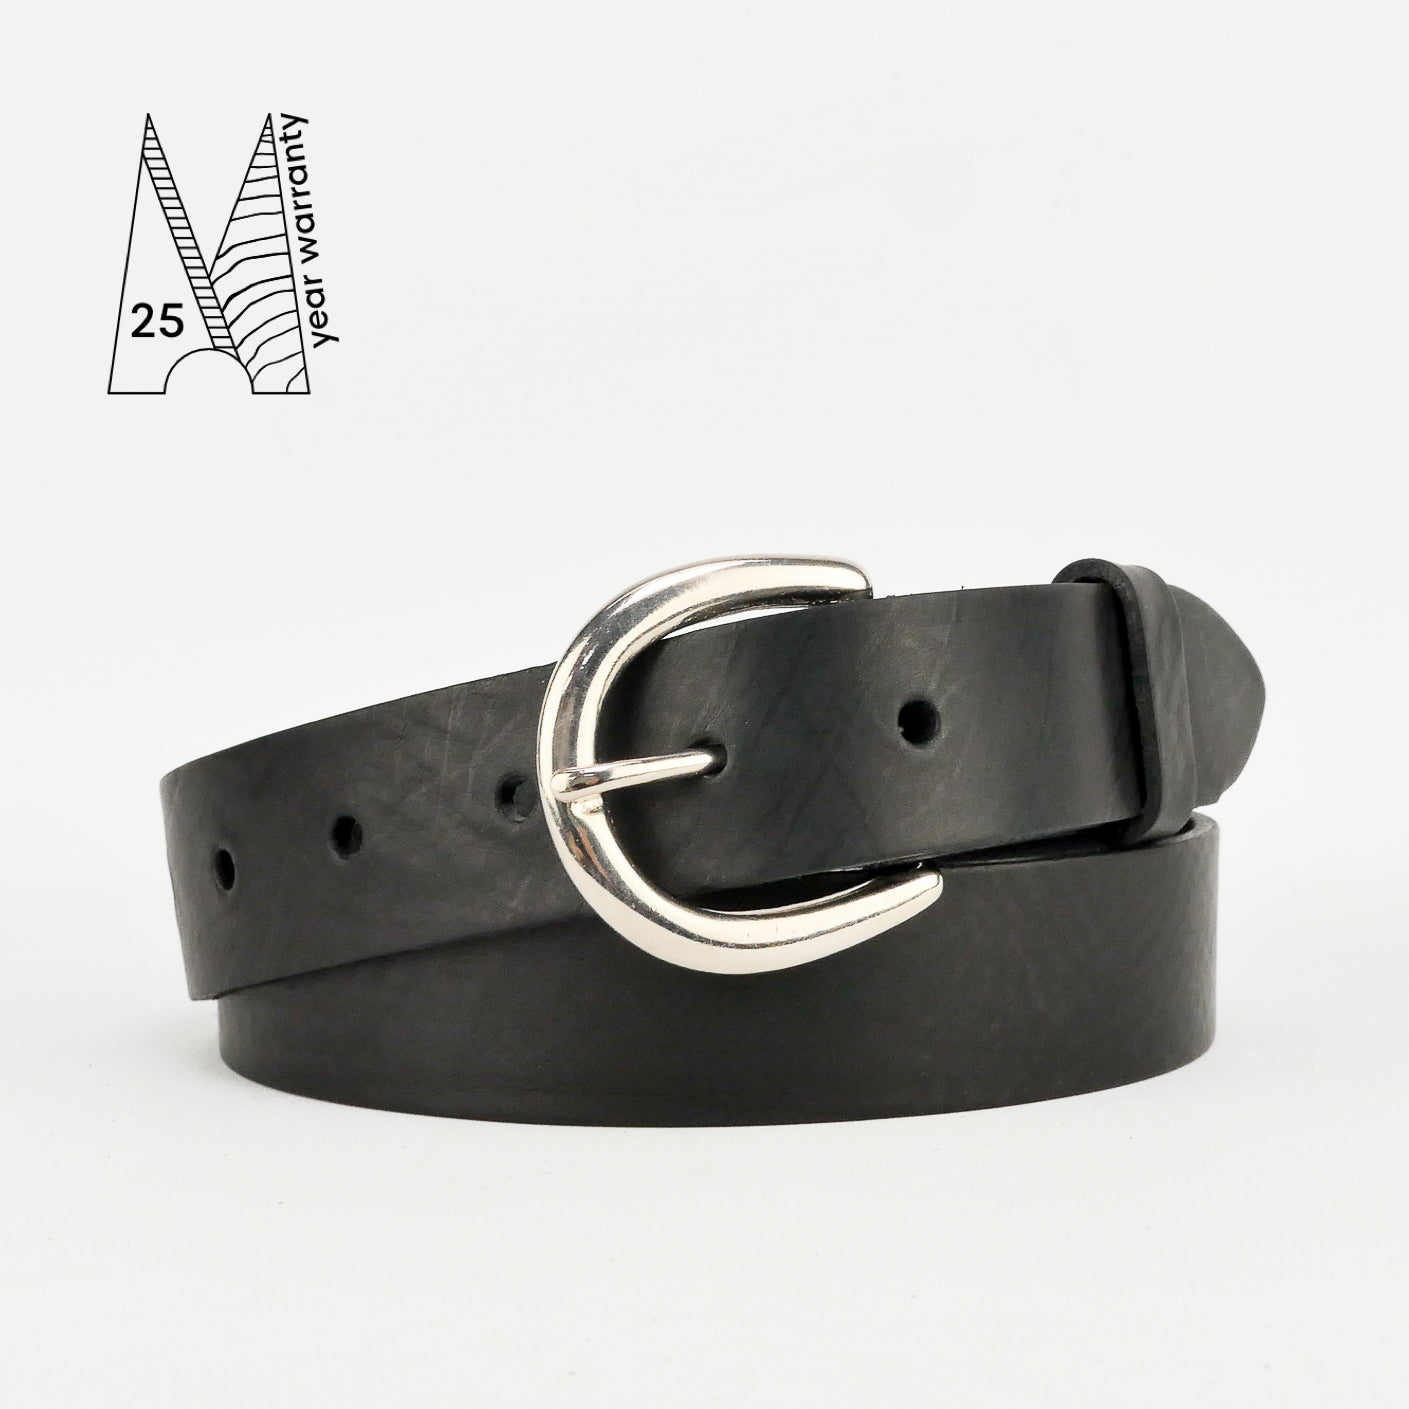 1 1/4" Classic Black Leather Belt